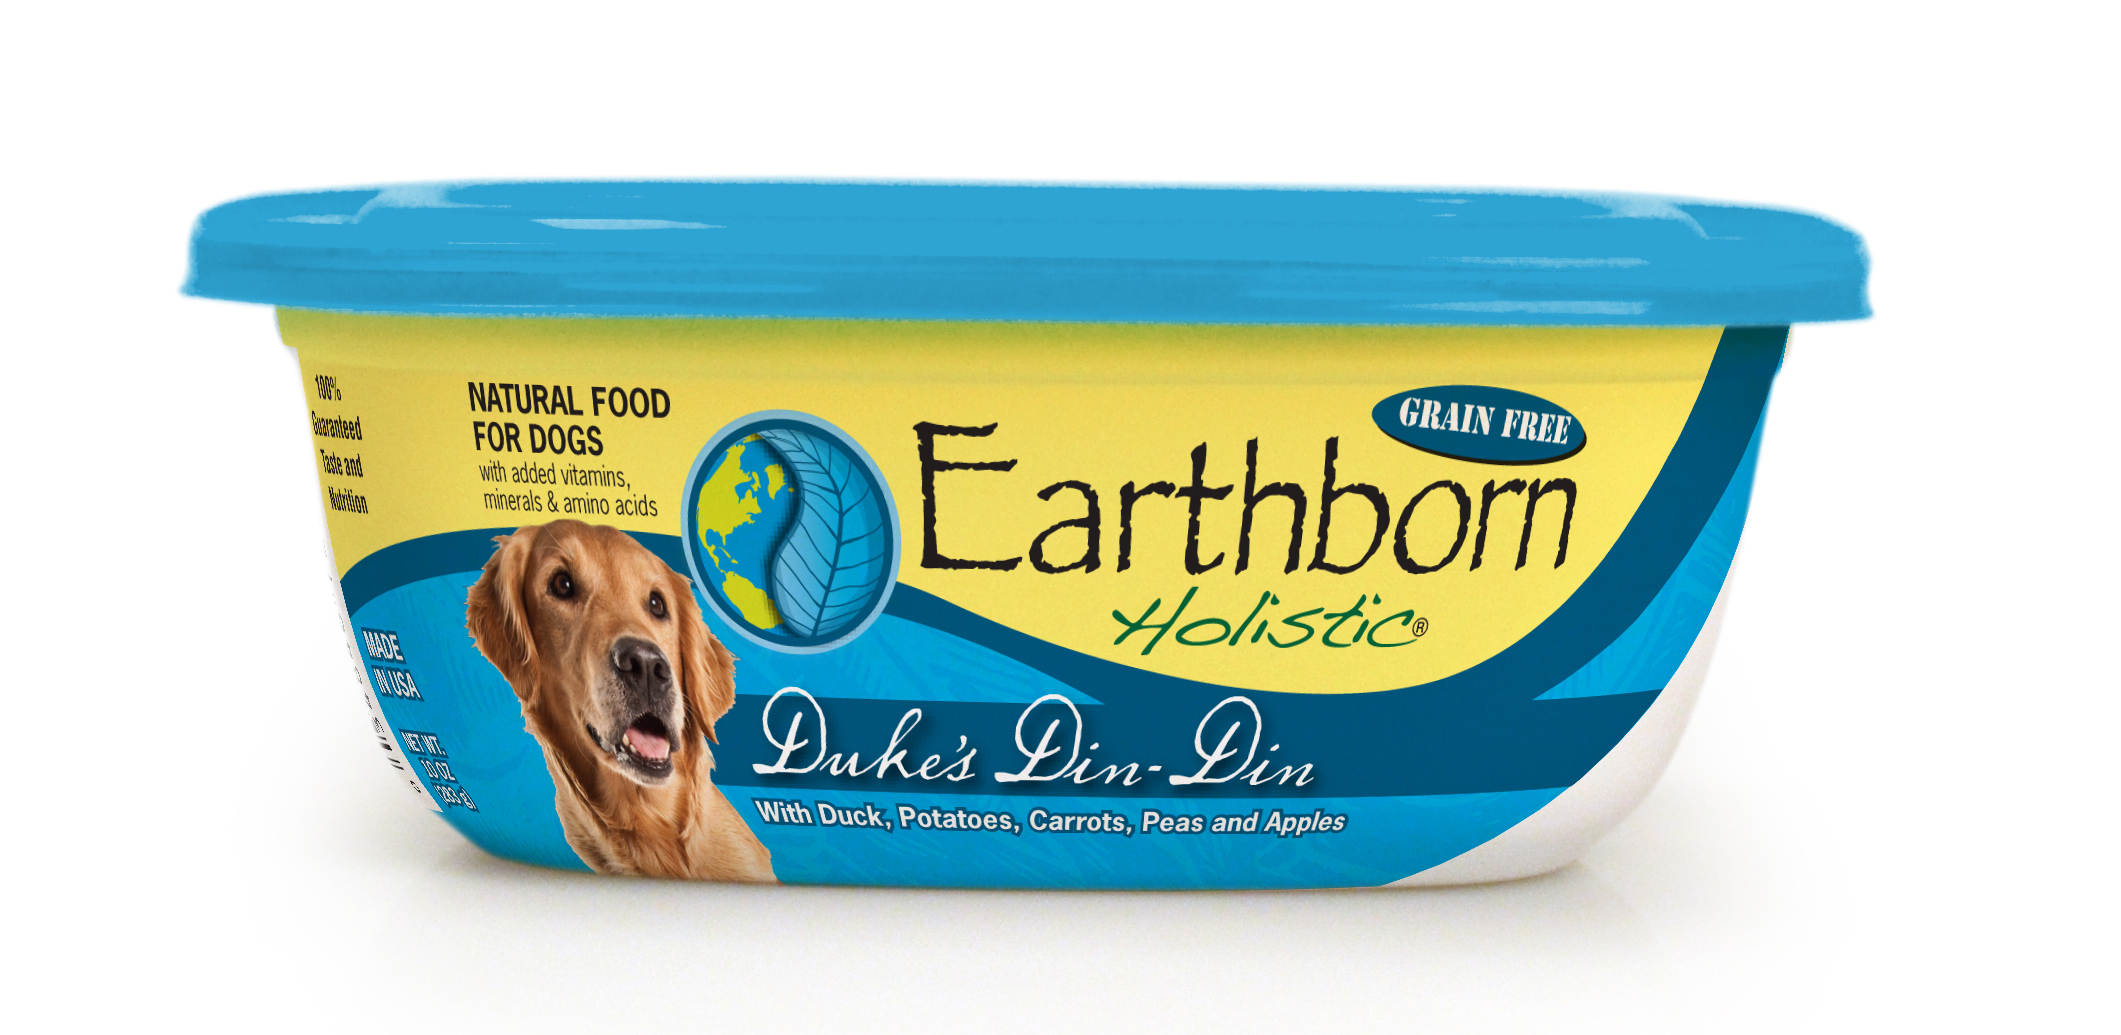 Earthborn Holistic Duke's Din-Din Stew, 8 oz